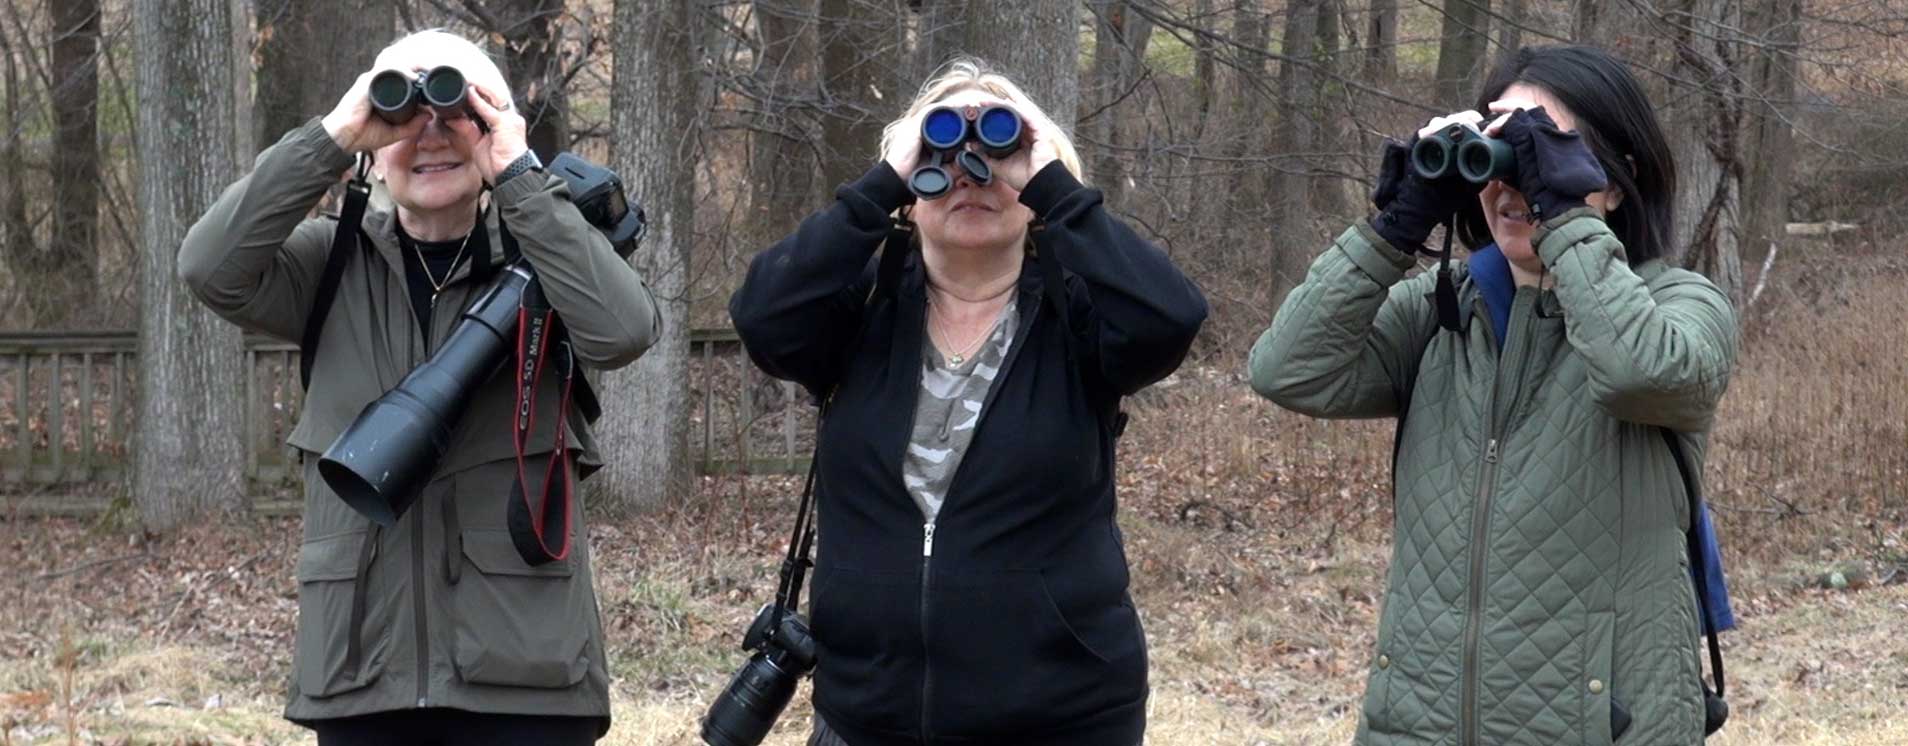 women with binoculars